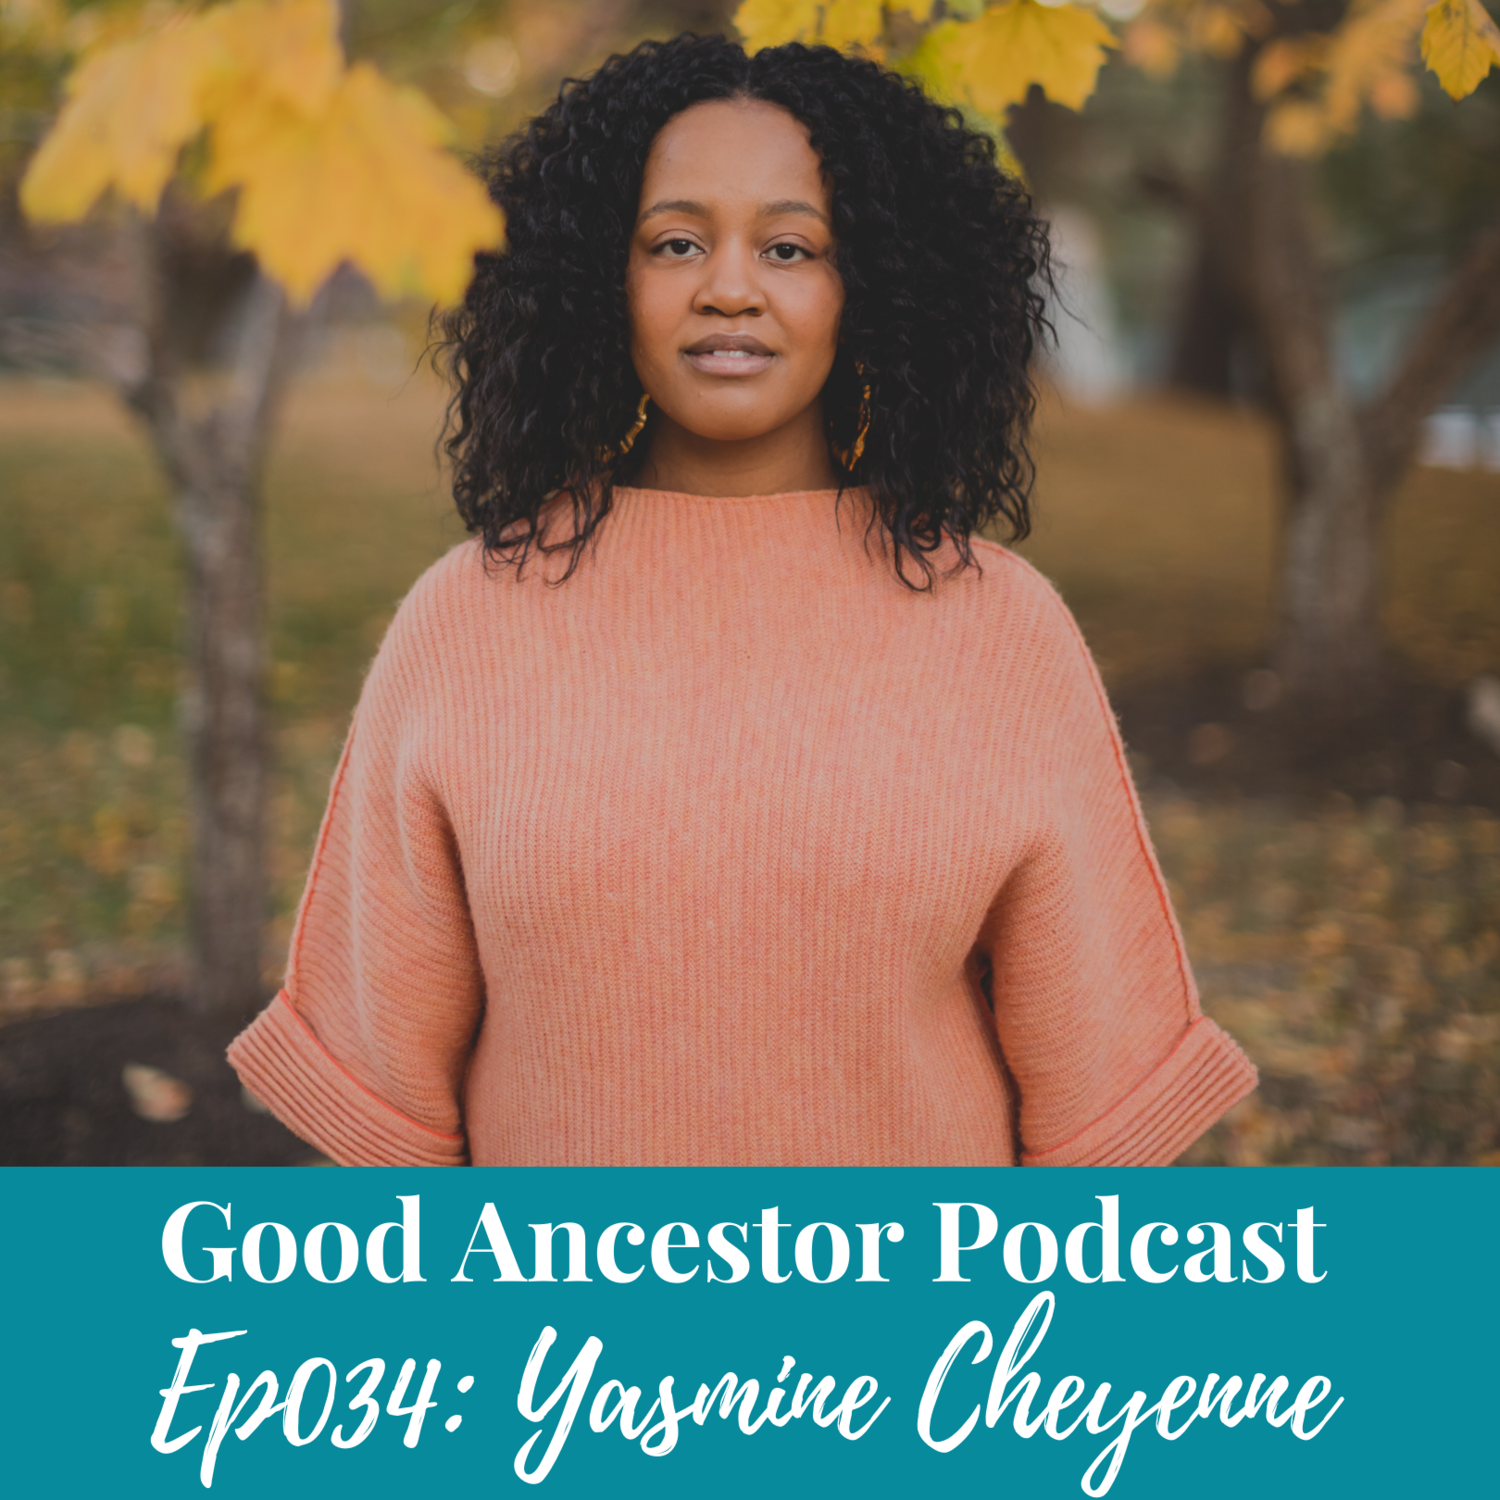 Ep034: #GoodAncestor Yasmine Cheyenne on the Practice of Self-Healing